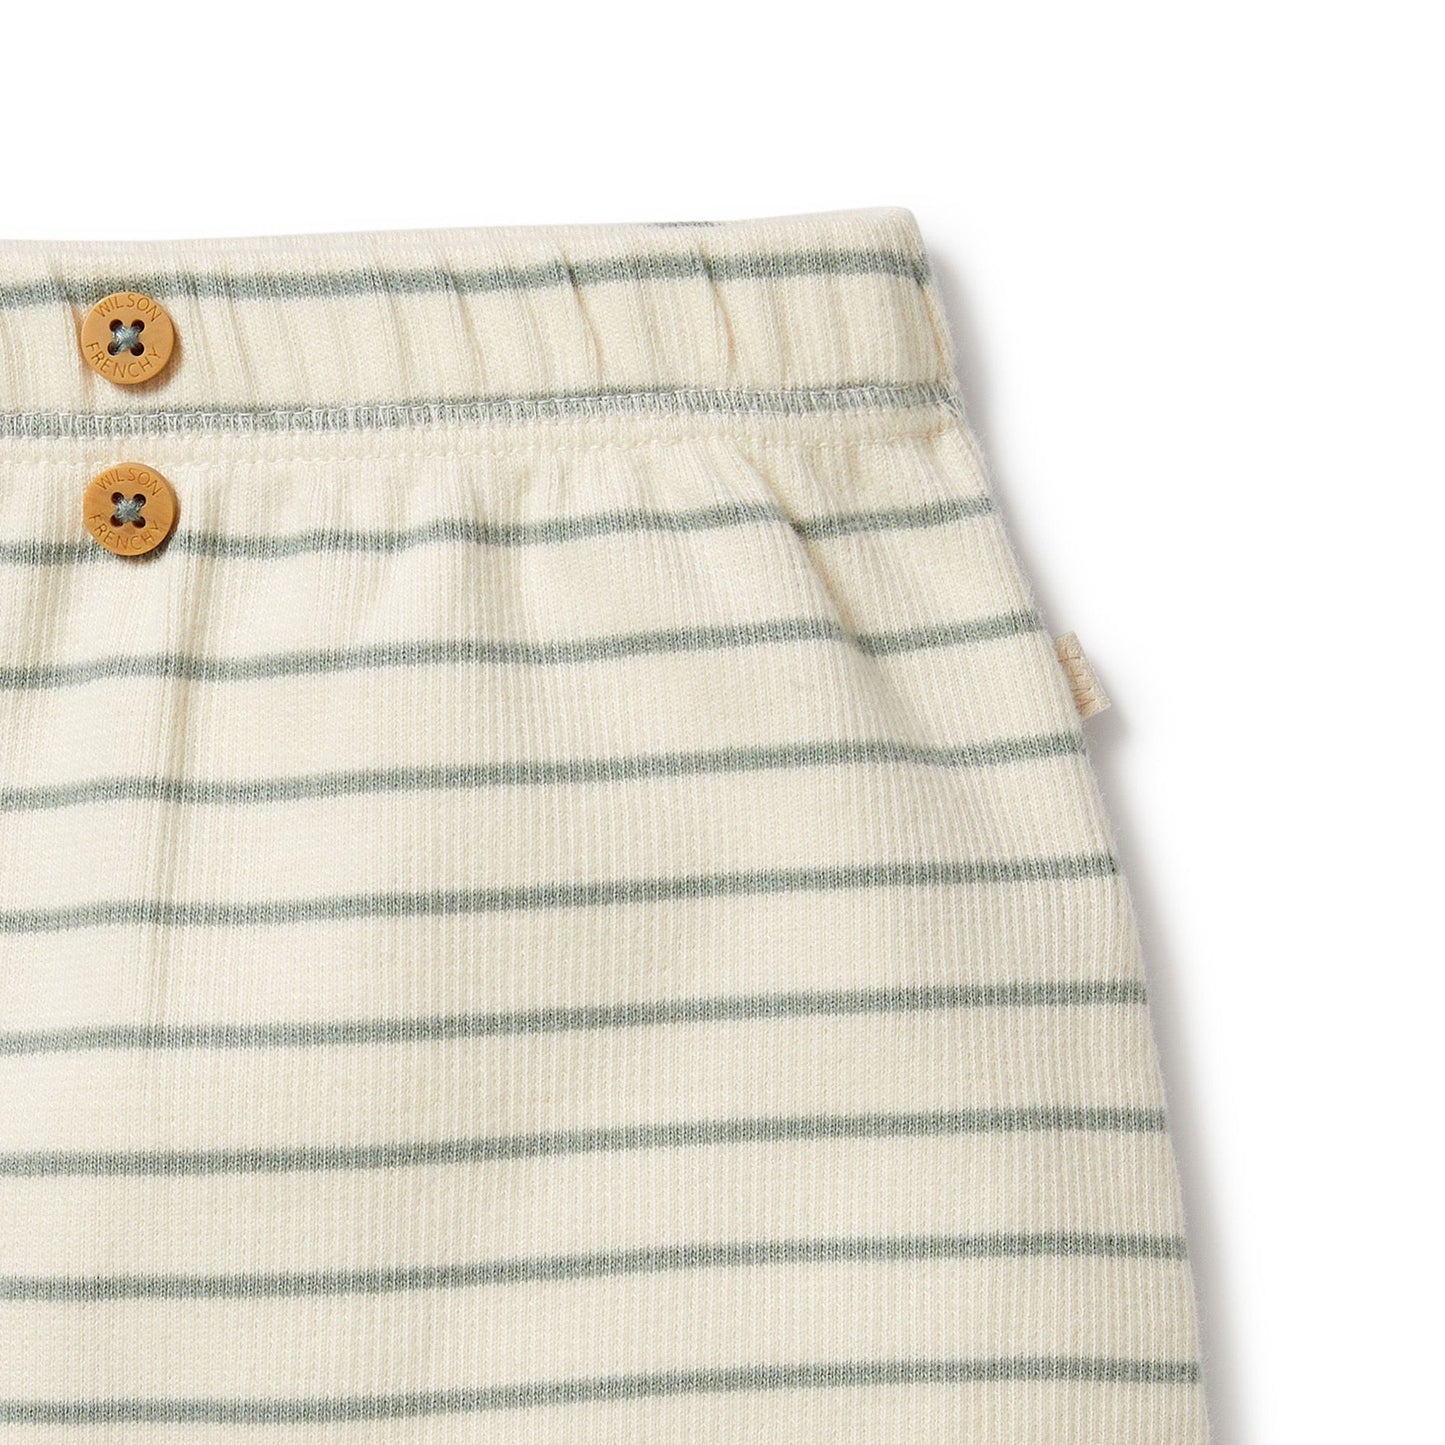 Petit Striped Shorts in Sage